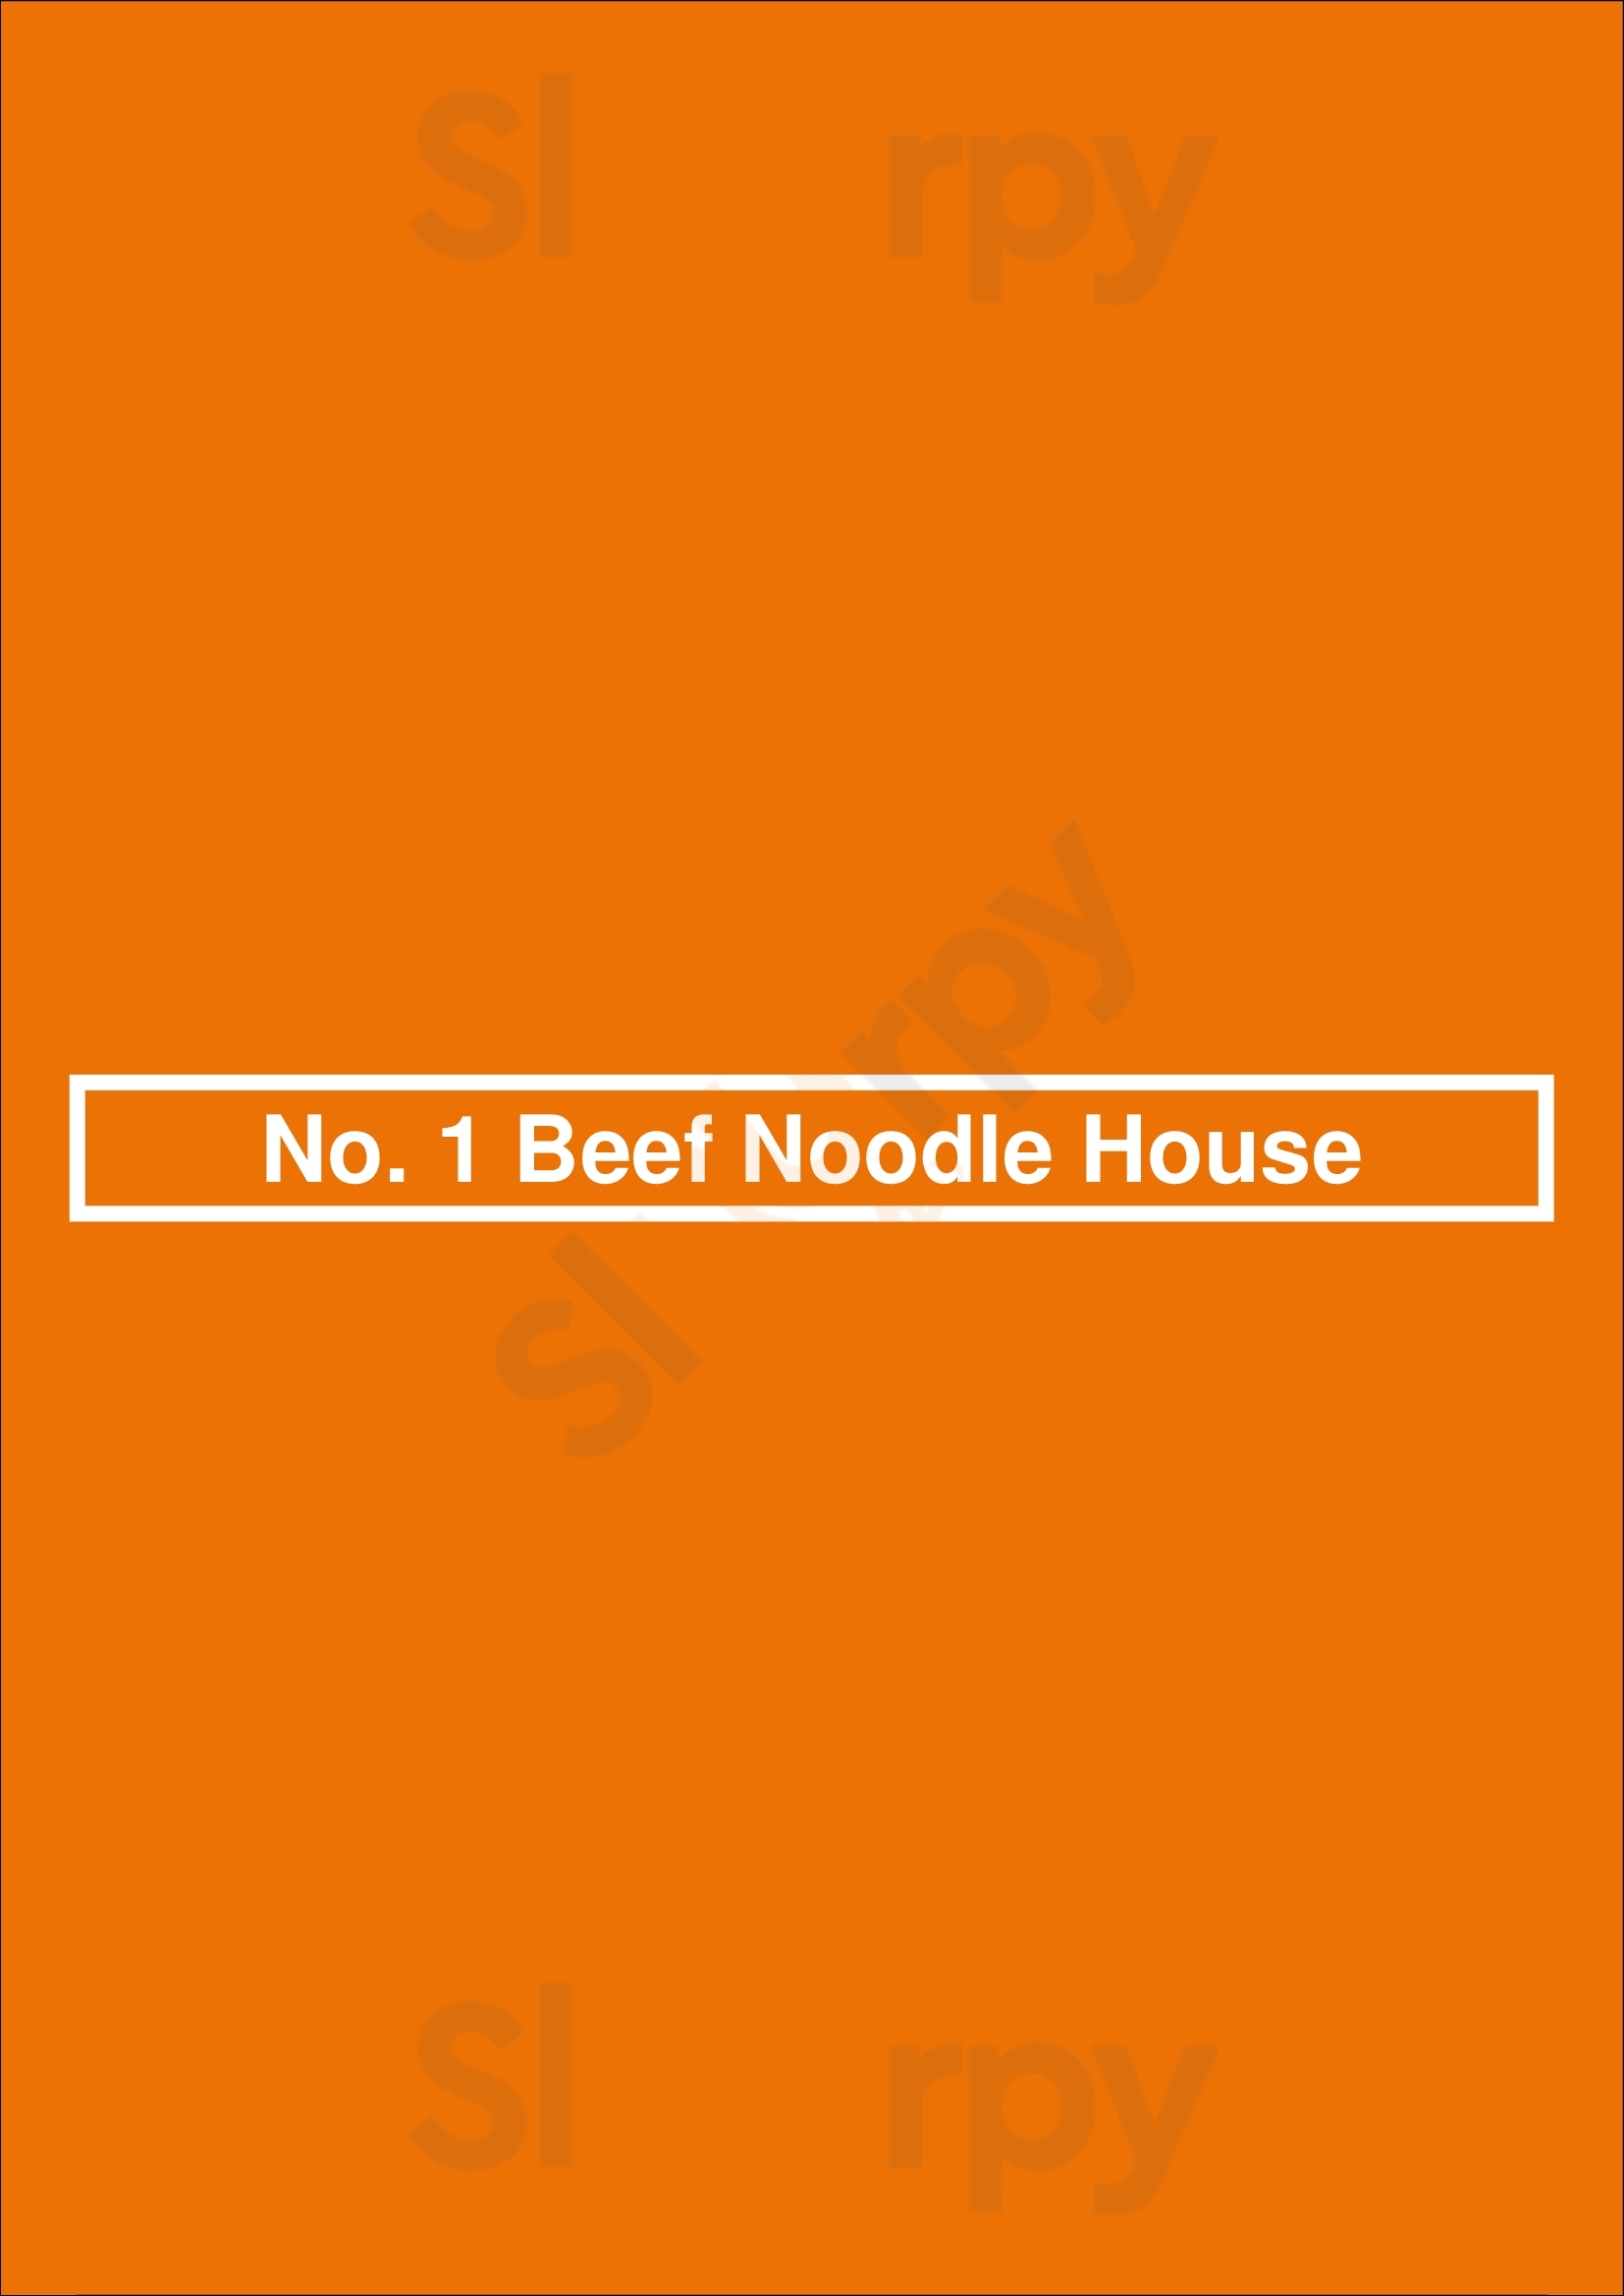 No. 1 Beef Noodle House Burnaby Menu - 1